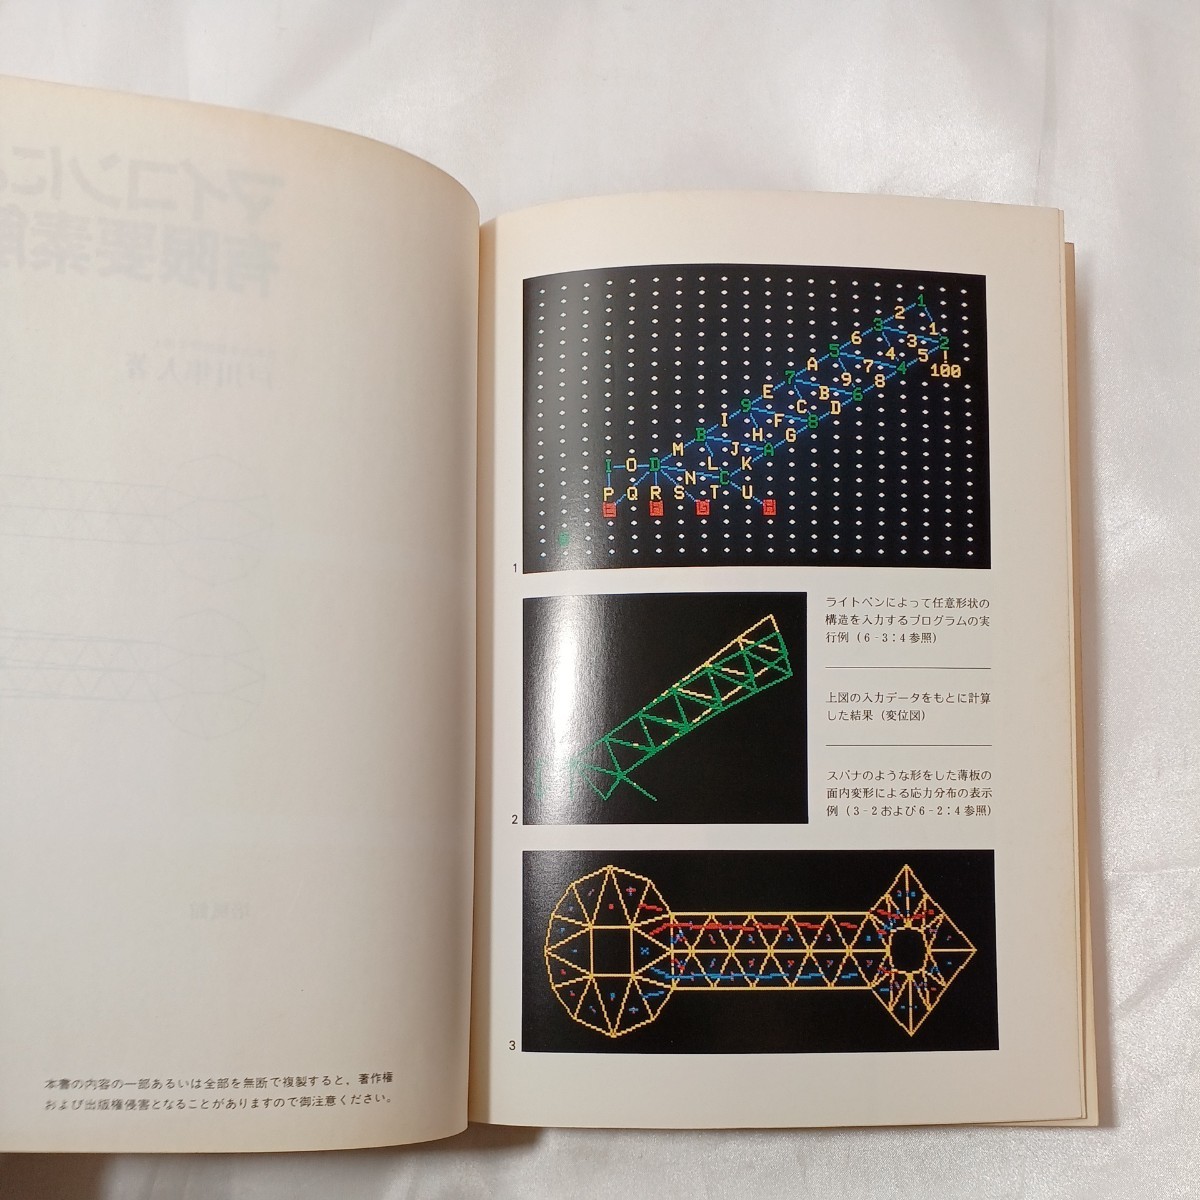 zaa-457♪マイコンによる有限要素解析 　 戸川 隼人 (著)　培風館 (1983/2/25)_画像2